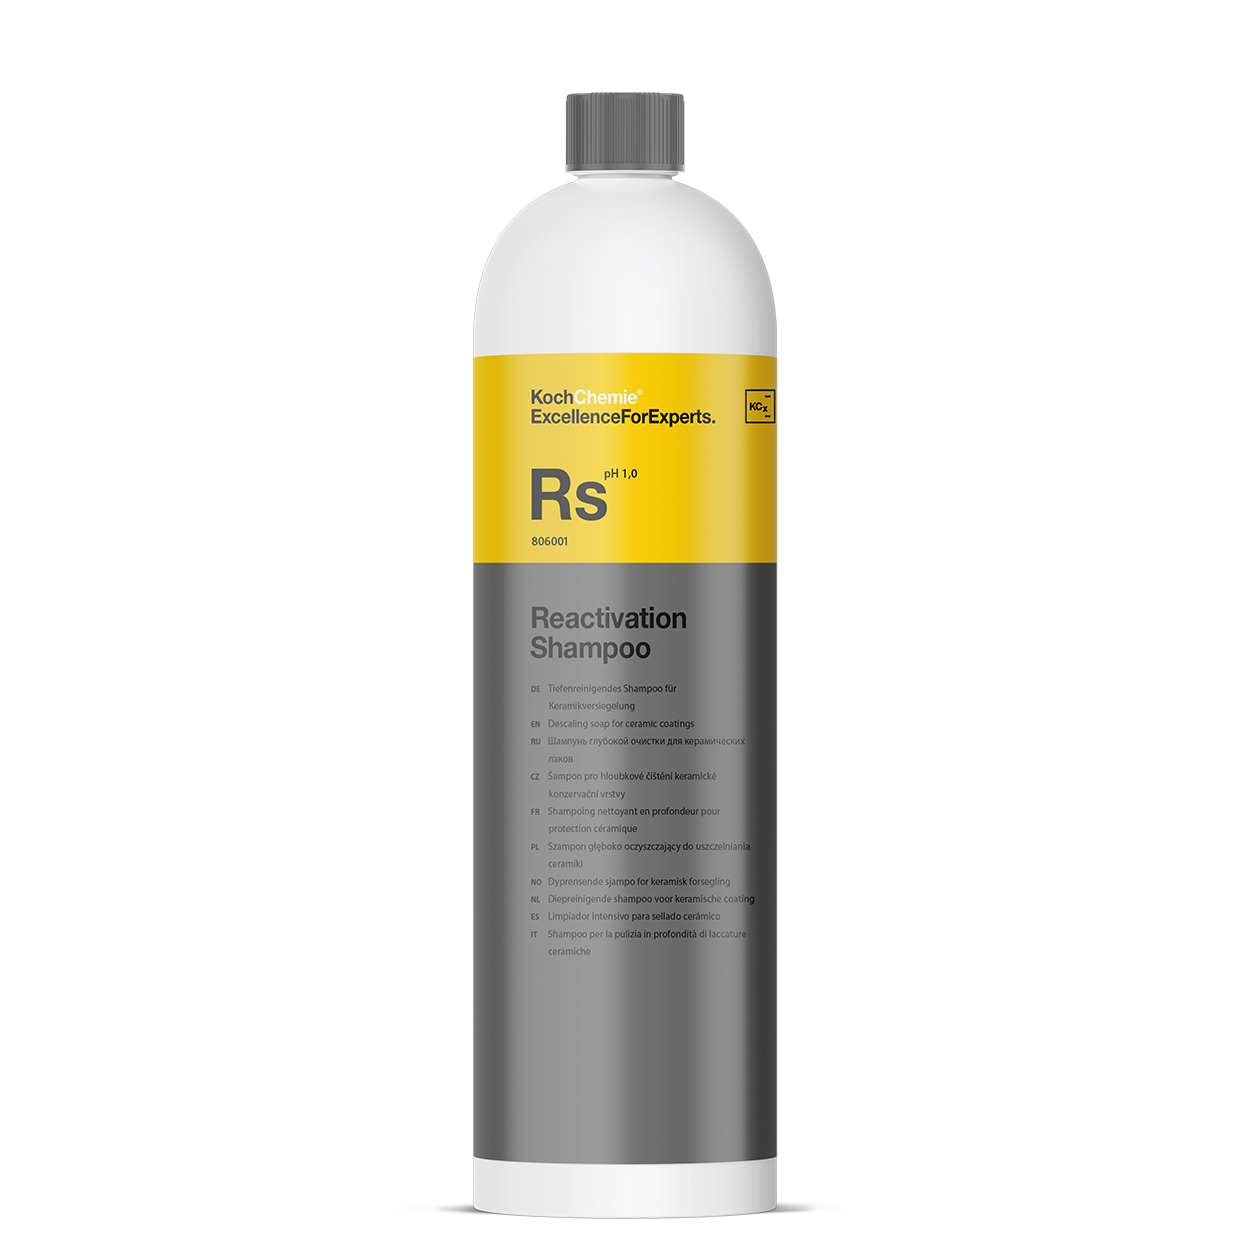 Reactivation Shampoo (Rs) - KOCHCHEMIE